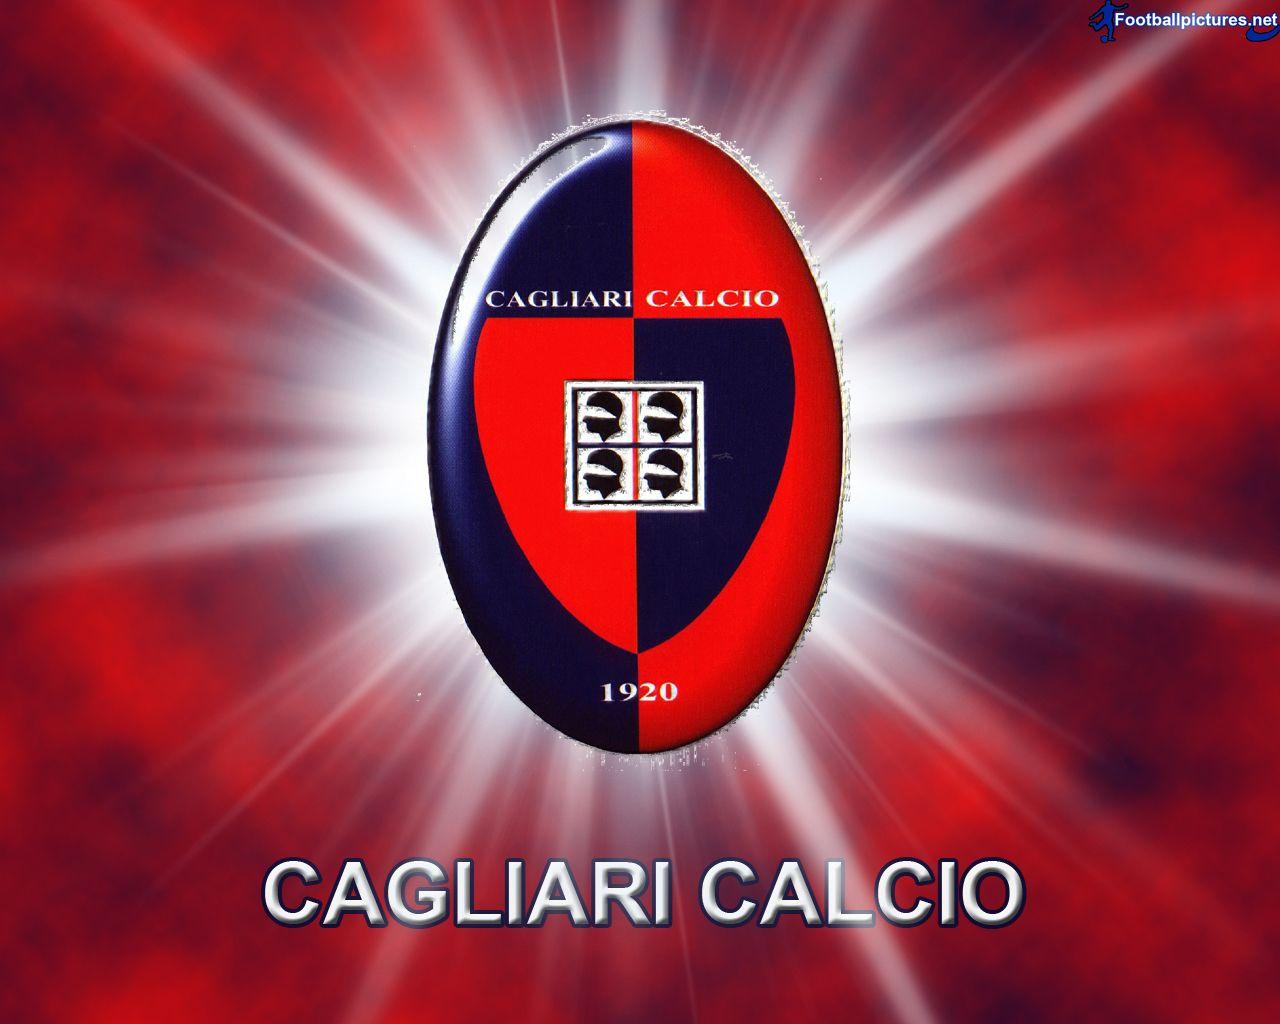 Cagliari of Italy wallpaper. Football Wallpaper. Football